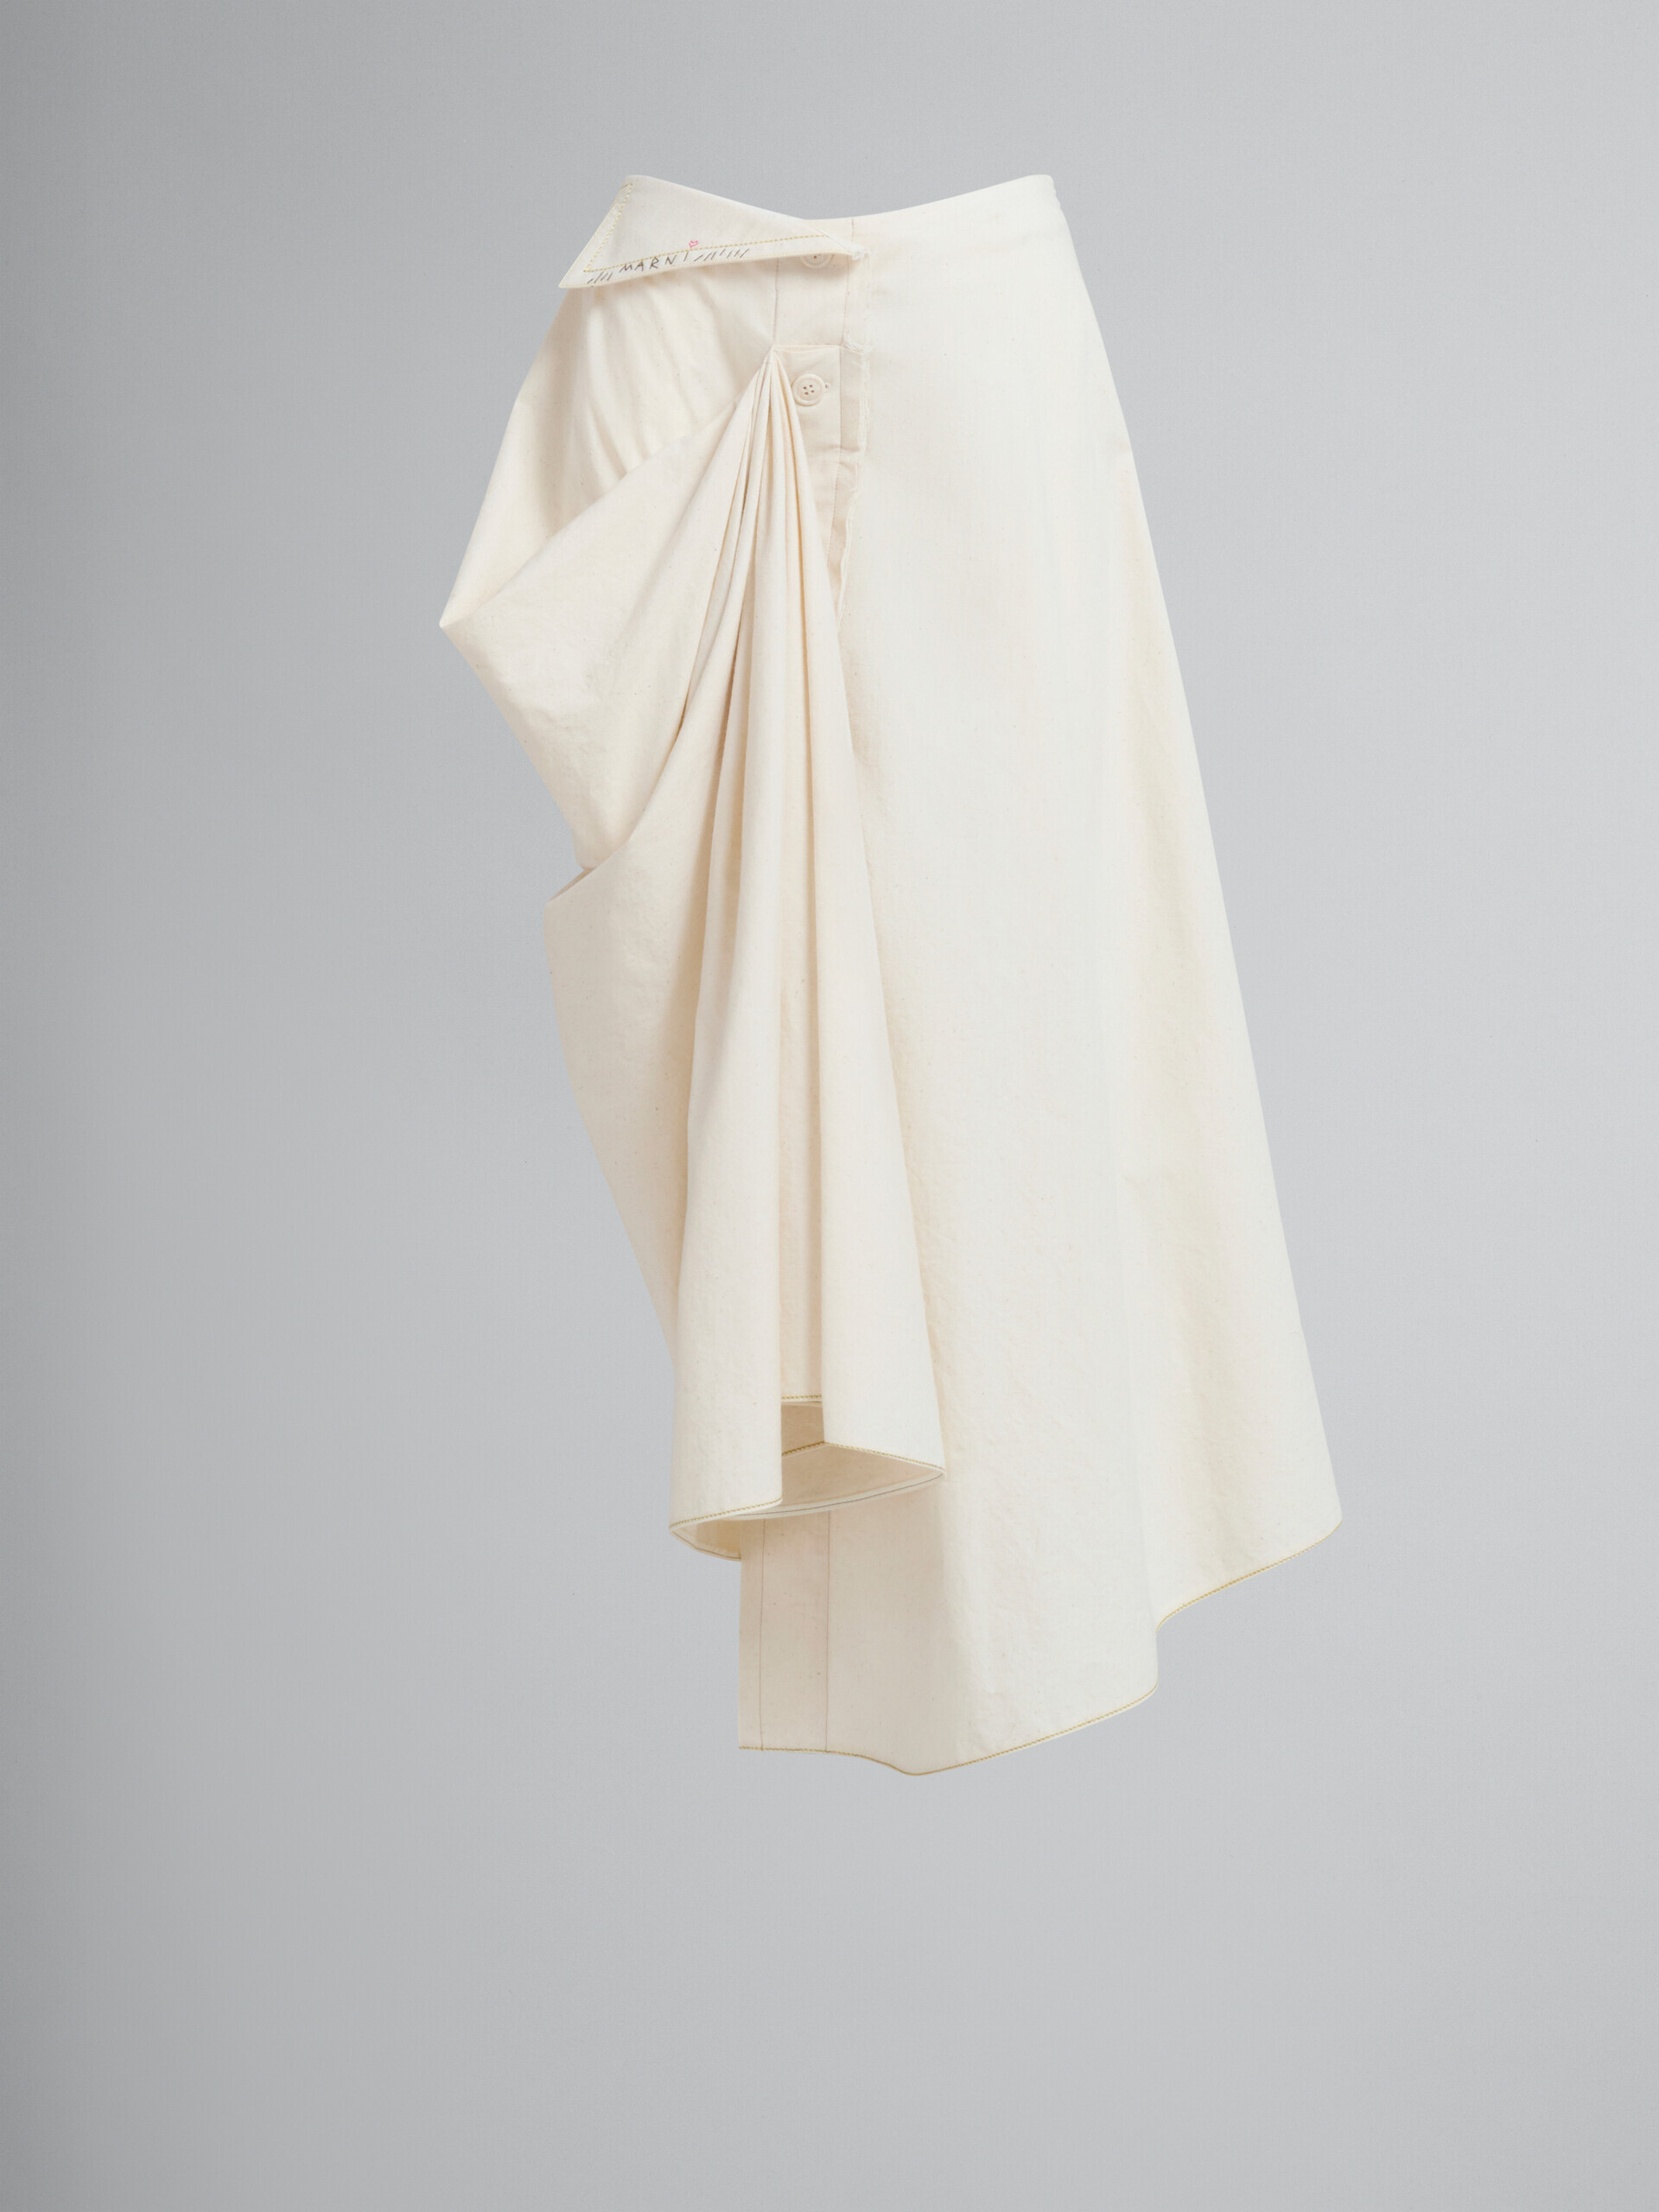 Falda asimétrica de lona de algodón orgánico beige claro - Faldas - Image 2